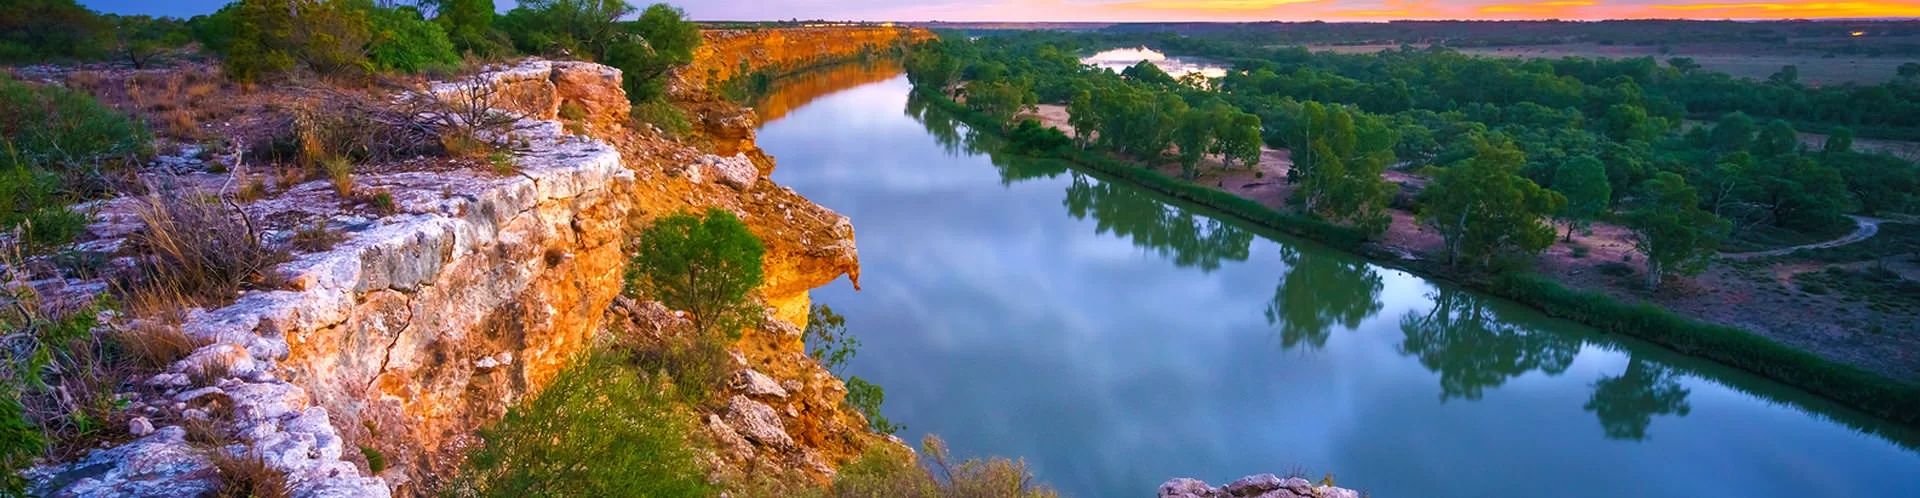 Murray River - South Australia